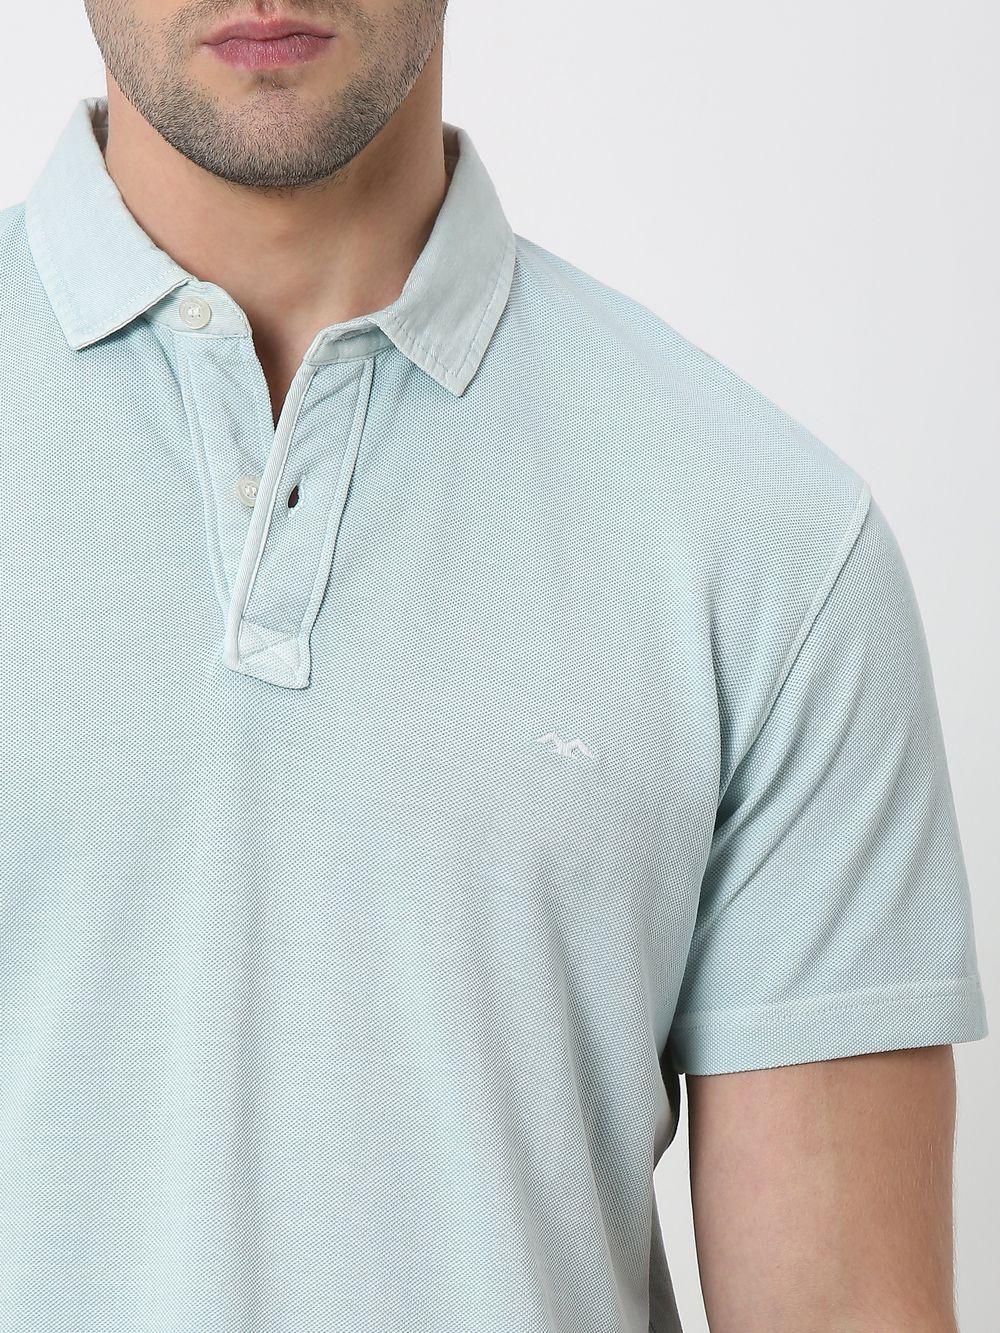 Light Blue Overdyed Plain Slim Fit Polo T-Shirt